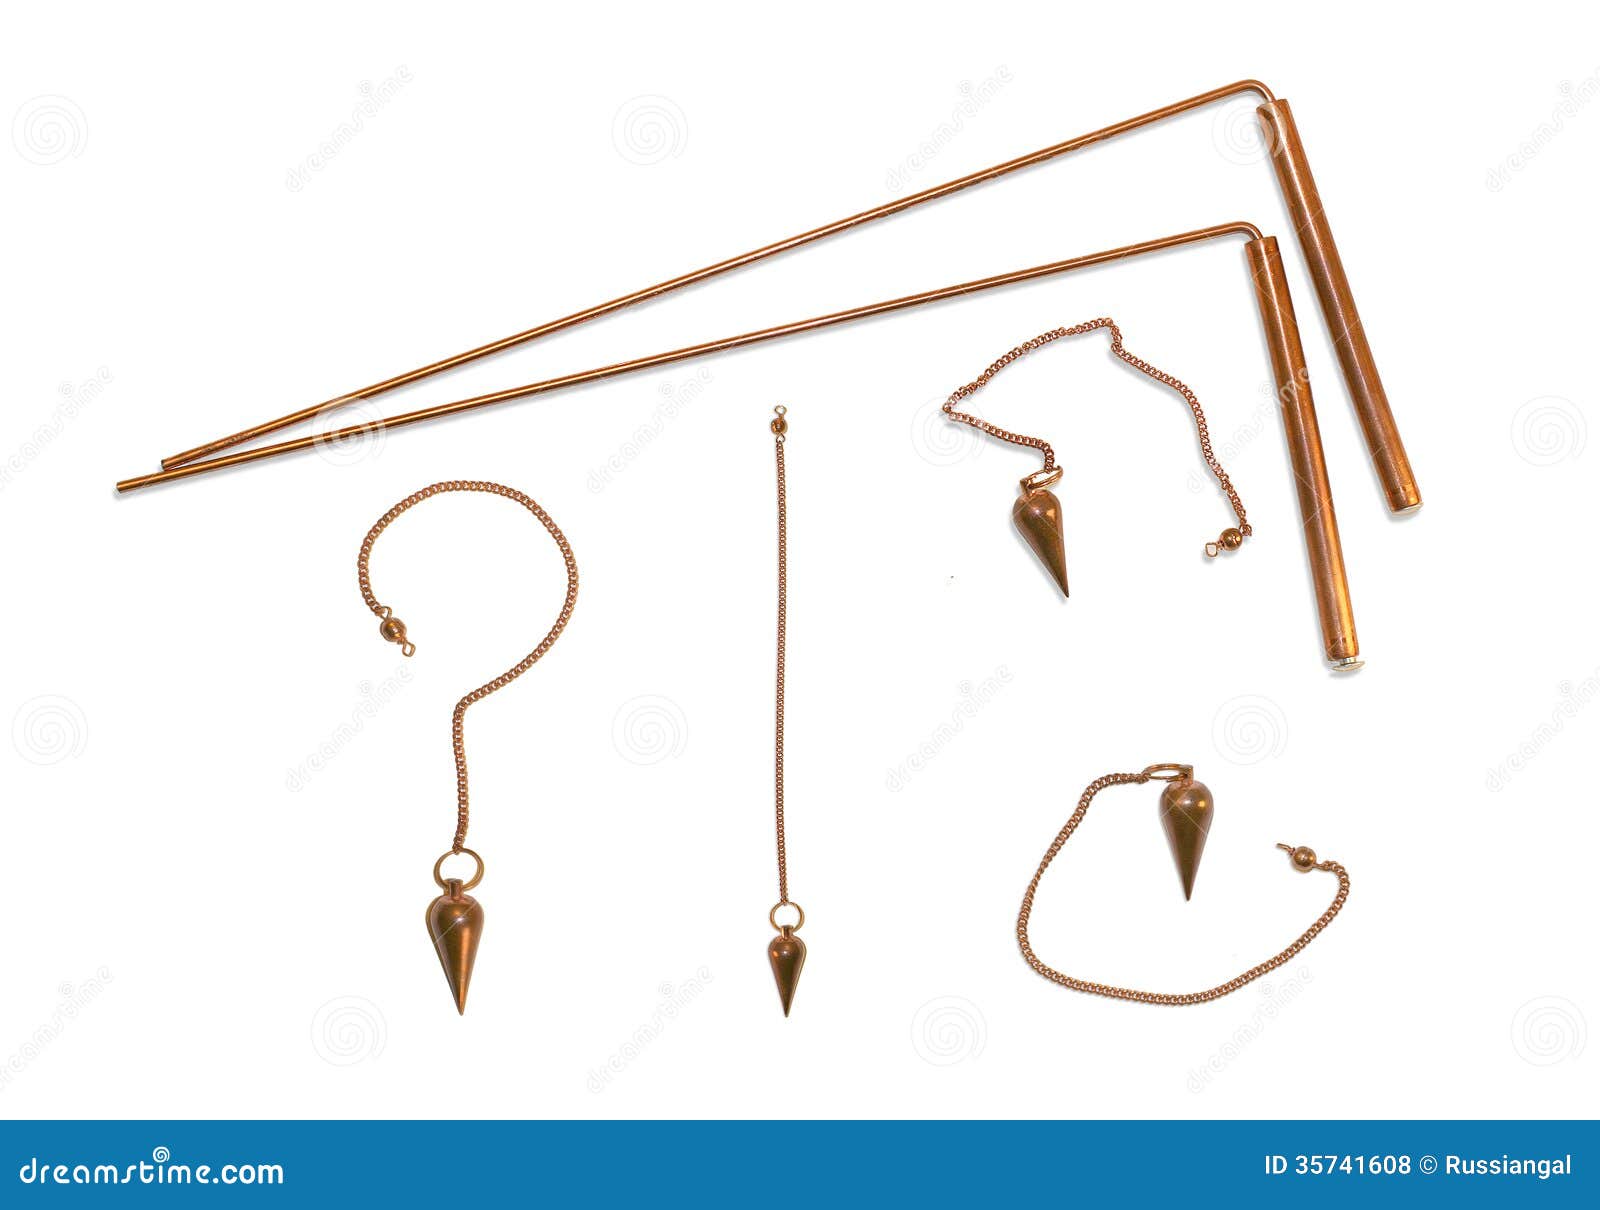 dowsing rods and pendulum